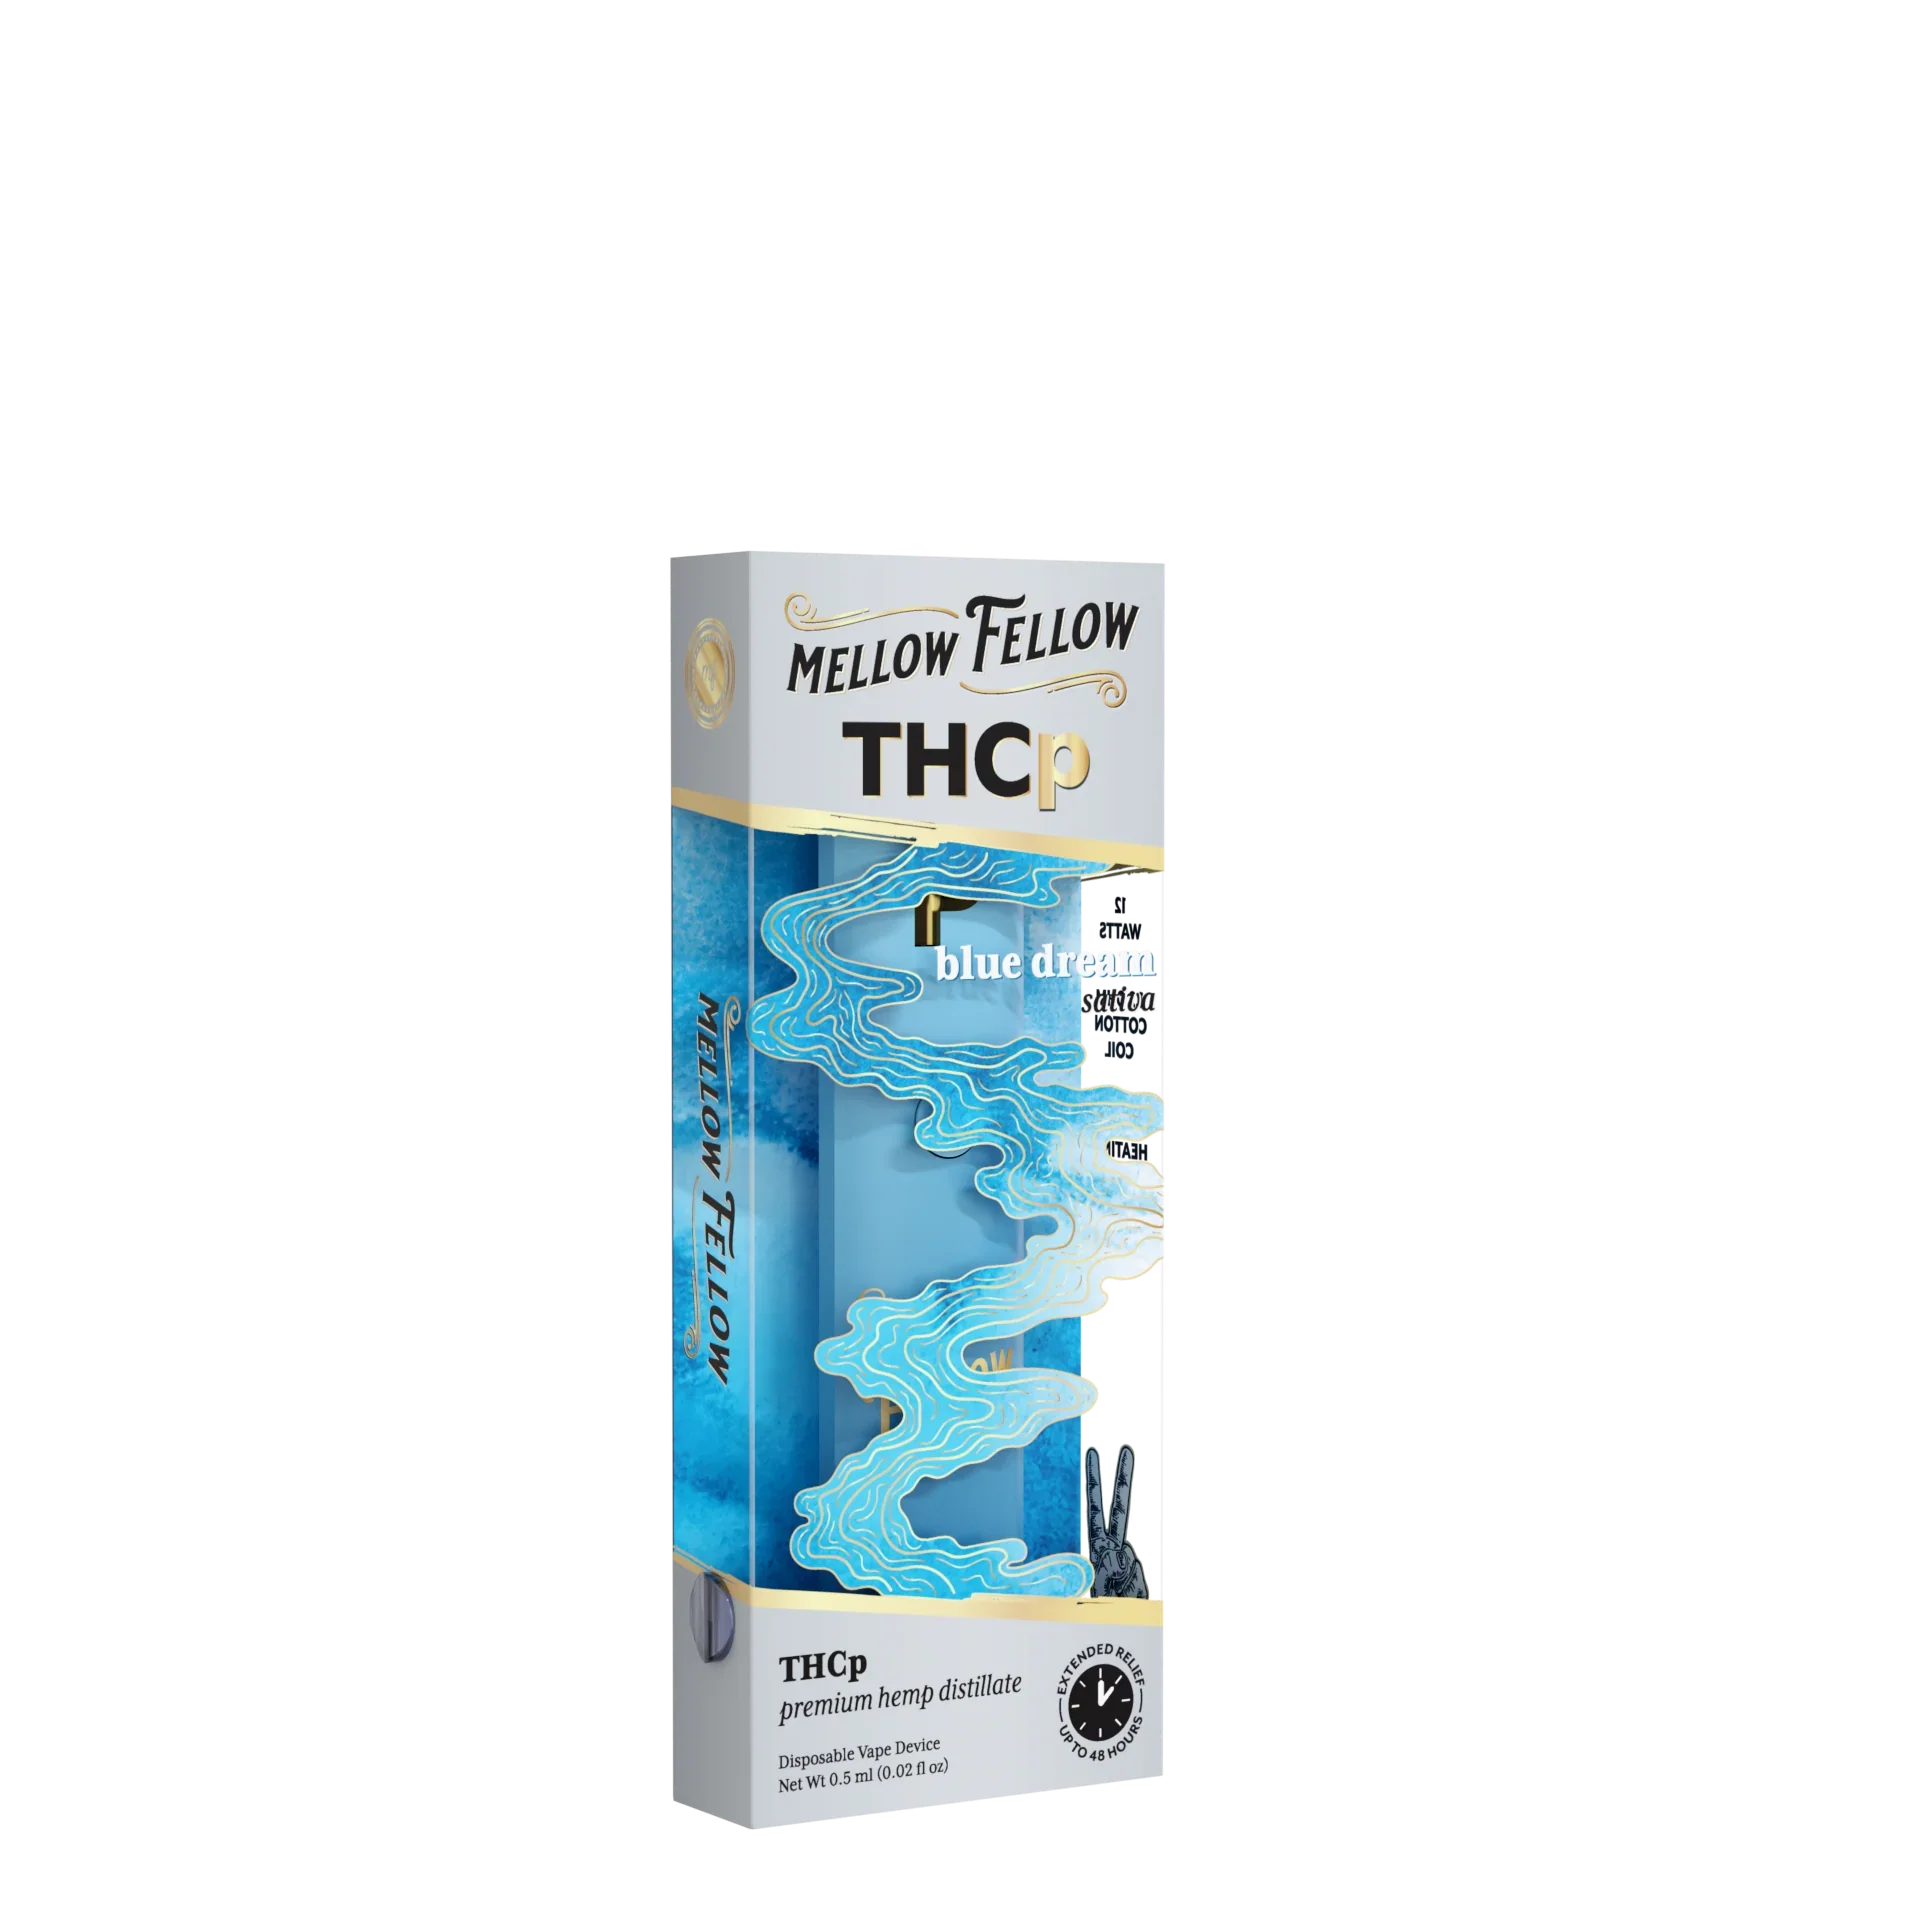 Mellow Fellow THCp 0.5g Disposable Vape - Blue Dream (Sativa) Best Price